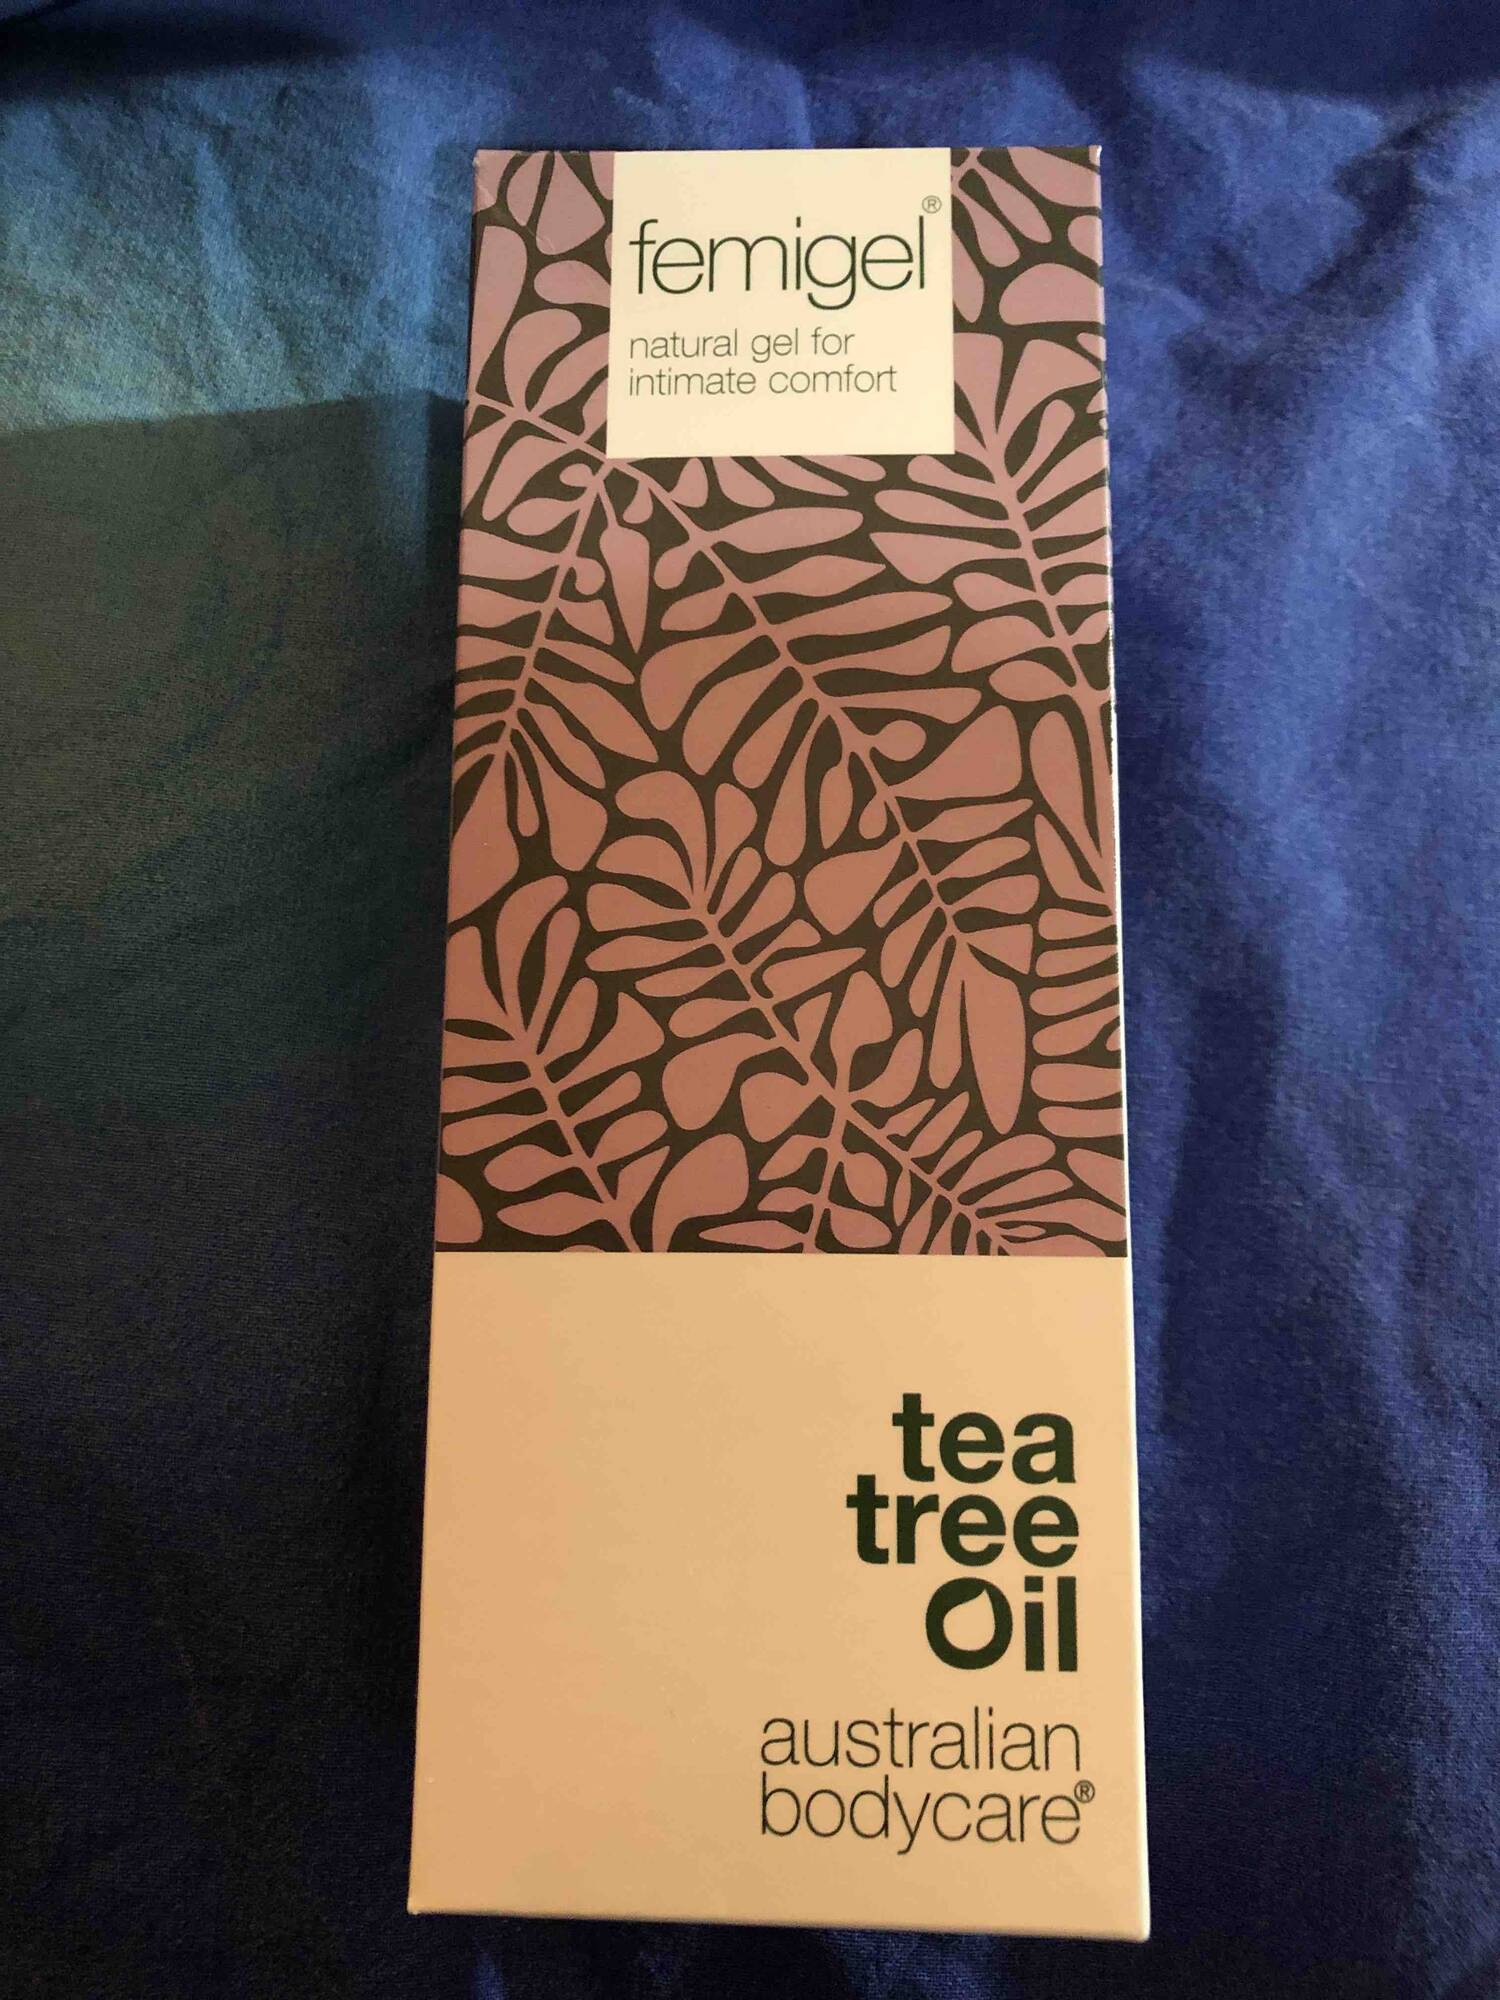 AUSTRALIAN BODYCARE - Femigel - Tea tree oil natural gel for intimate comfort 